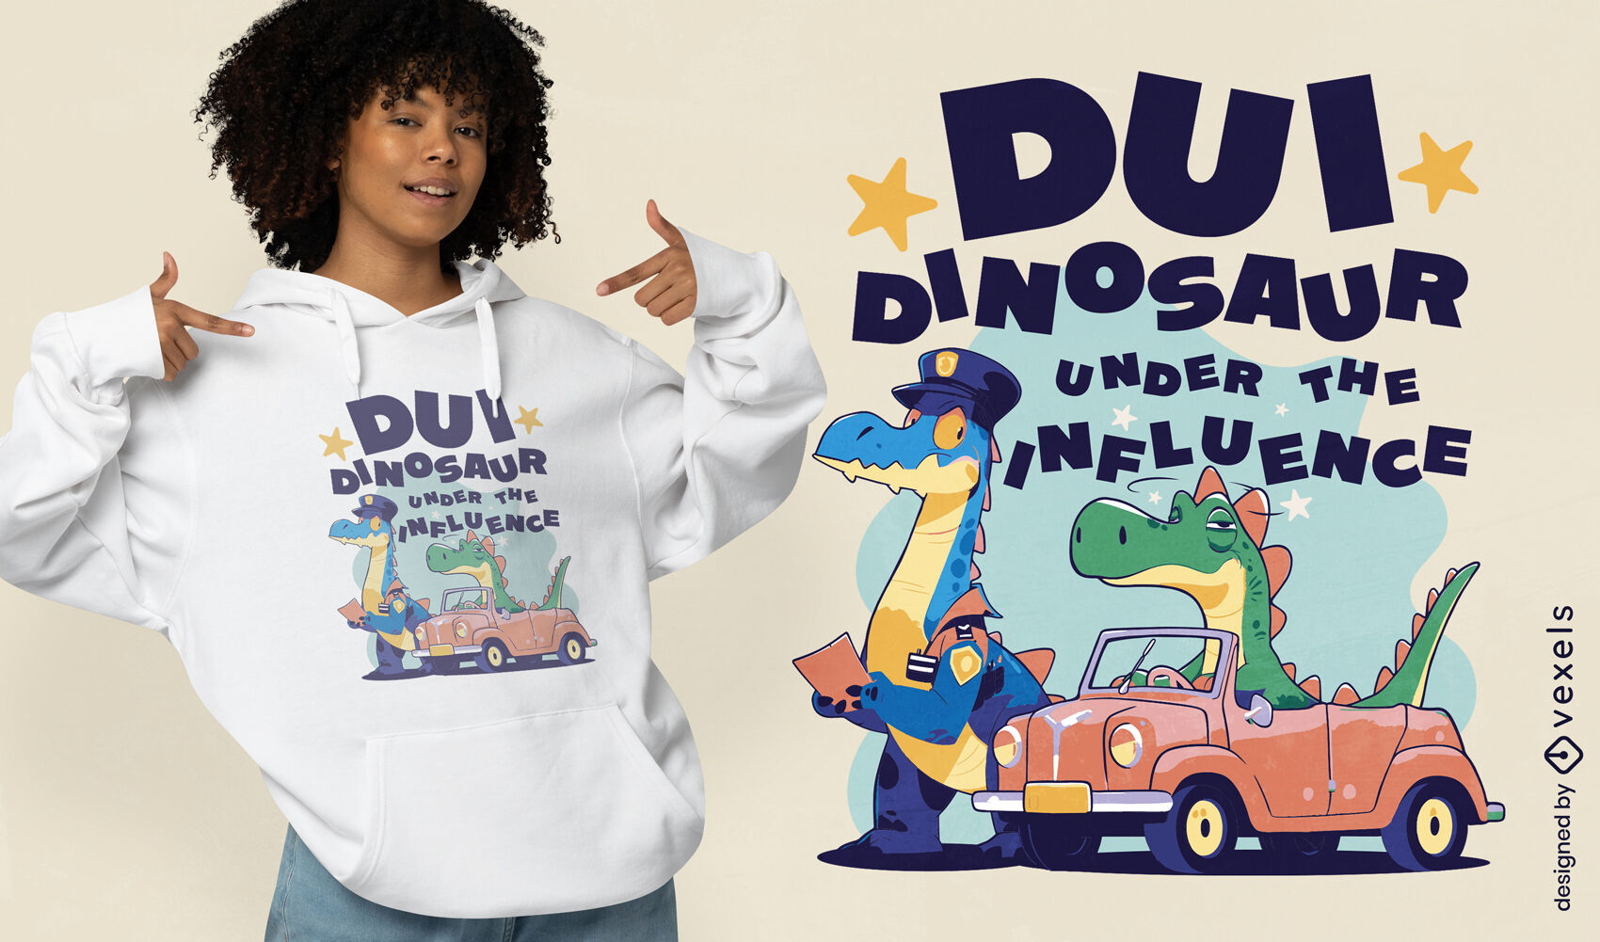 Dinosaur under the influence t-shirt design